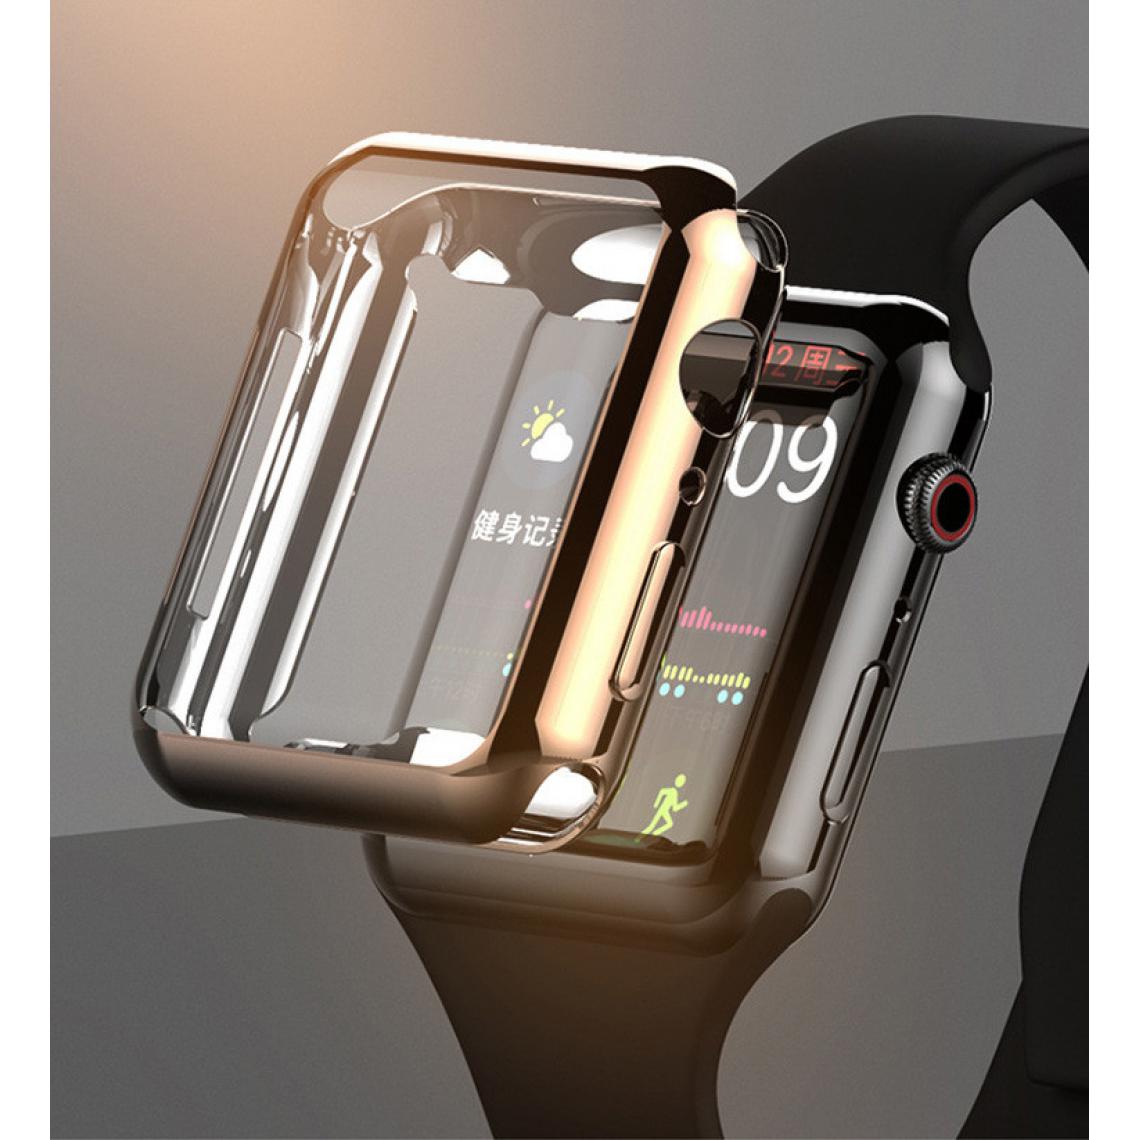 Shot - Coque Silicone 42mm pour IWATCH Serie 3 APPLE Bumper Protection Tactile (OR) - Accessoires montres connectées